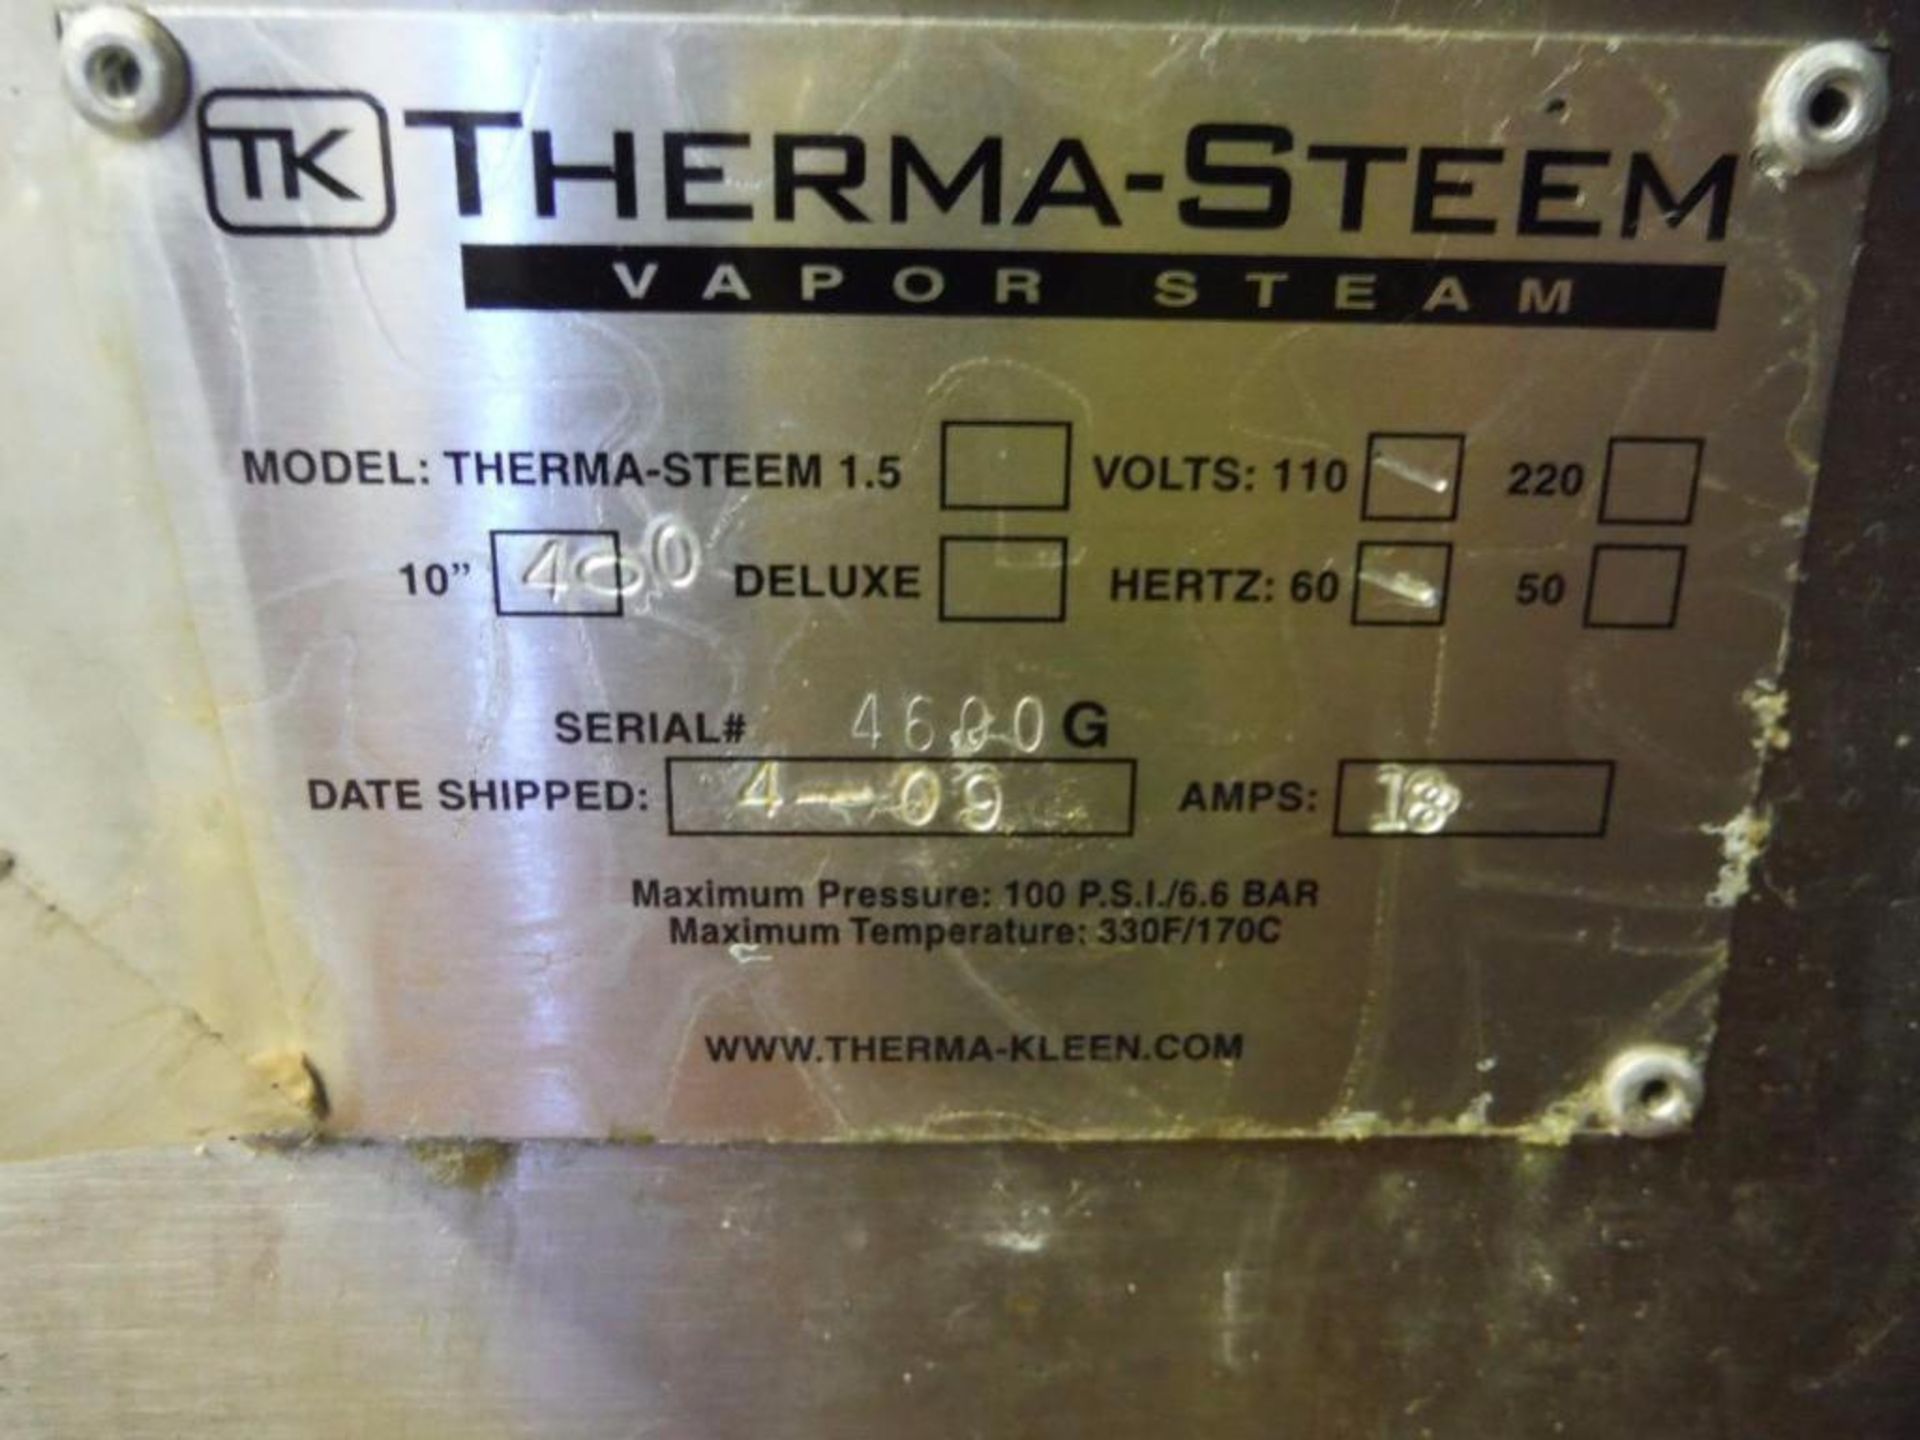 Therma-Steem Port Steamer, Model: Therma-Steem 1.5, S/N: 4600  Rigging Fee: $10 - Image 2 of 2